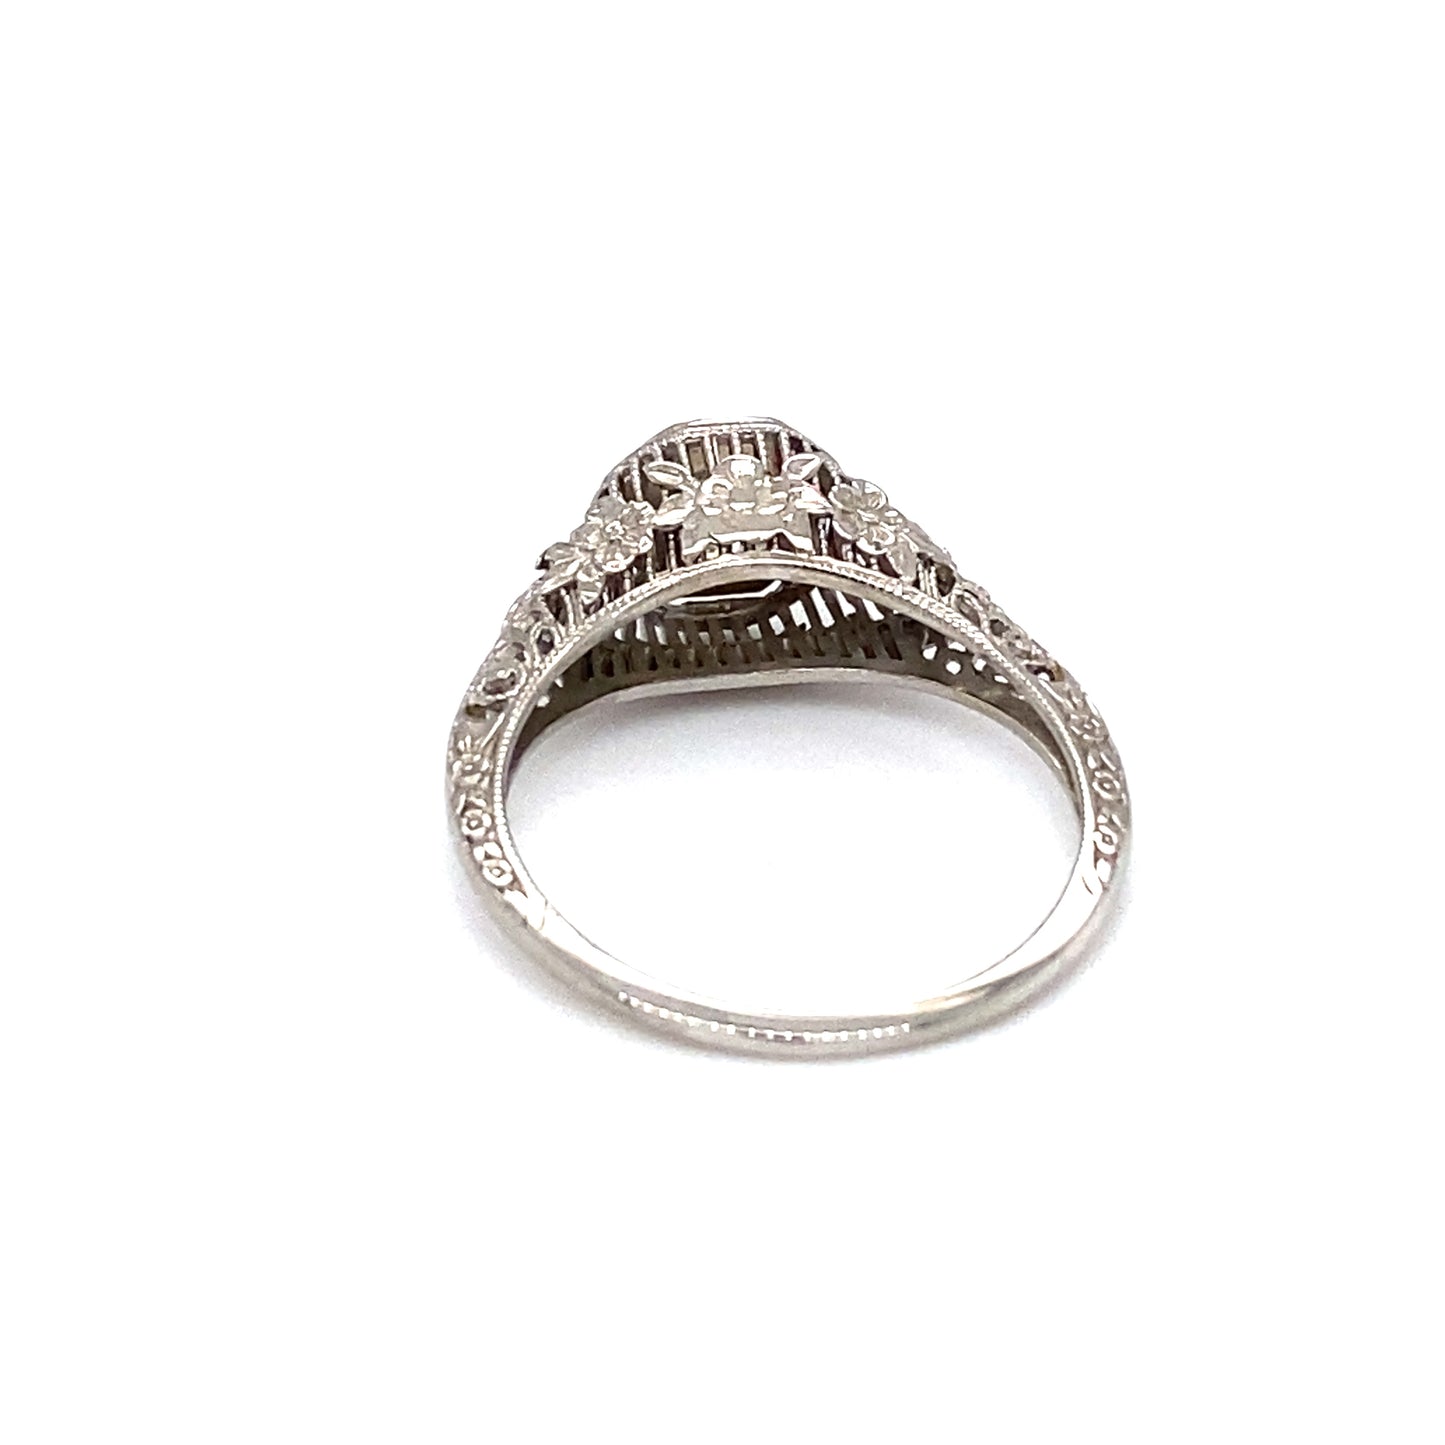 Circa 1920s Art Deco 0.35ct Diamond Ring in 18K White Gold